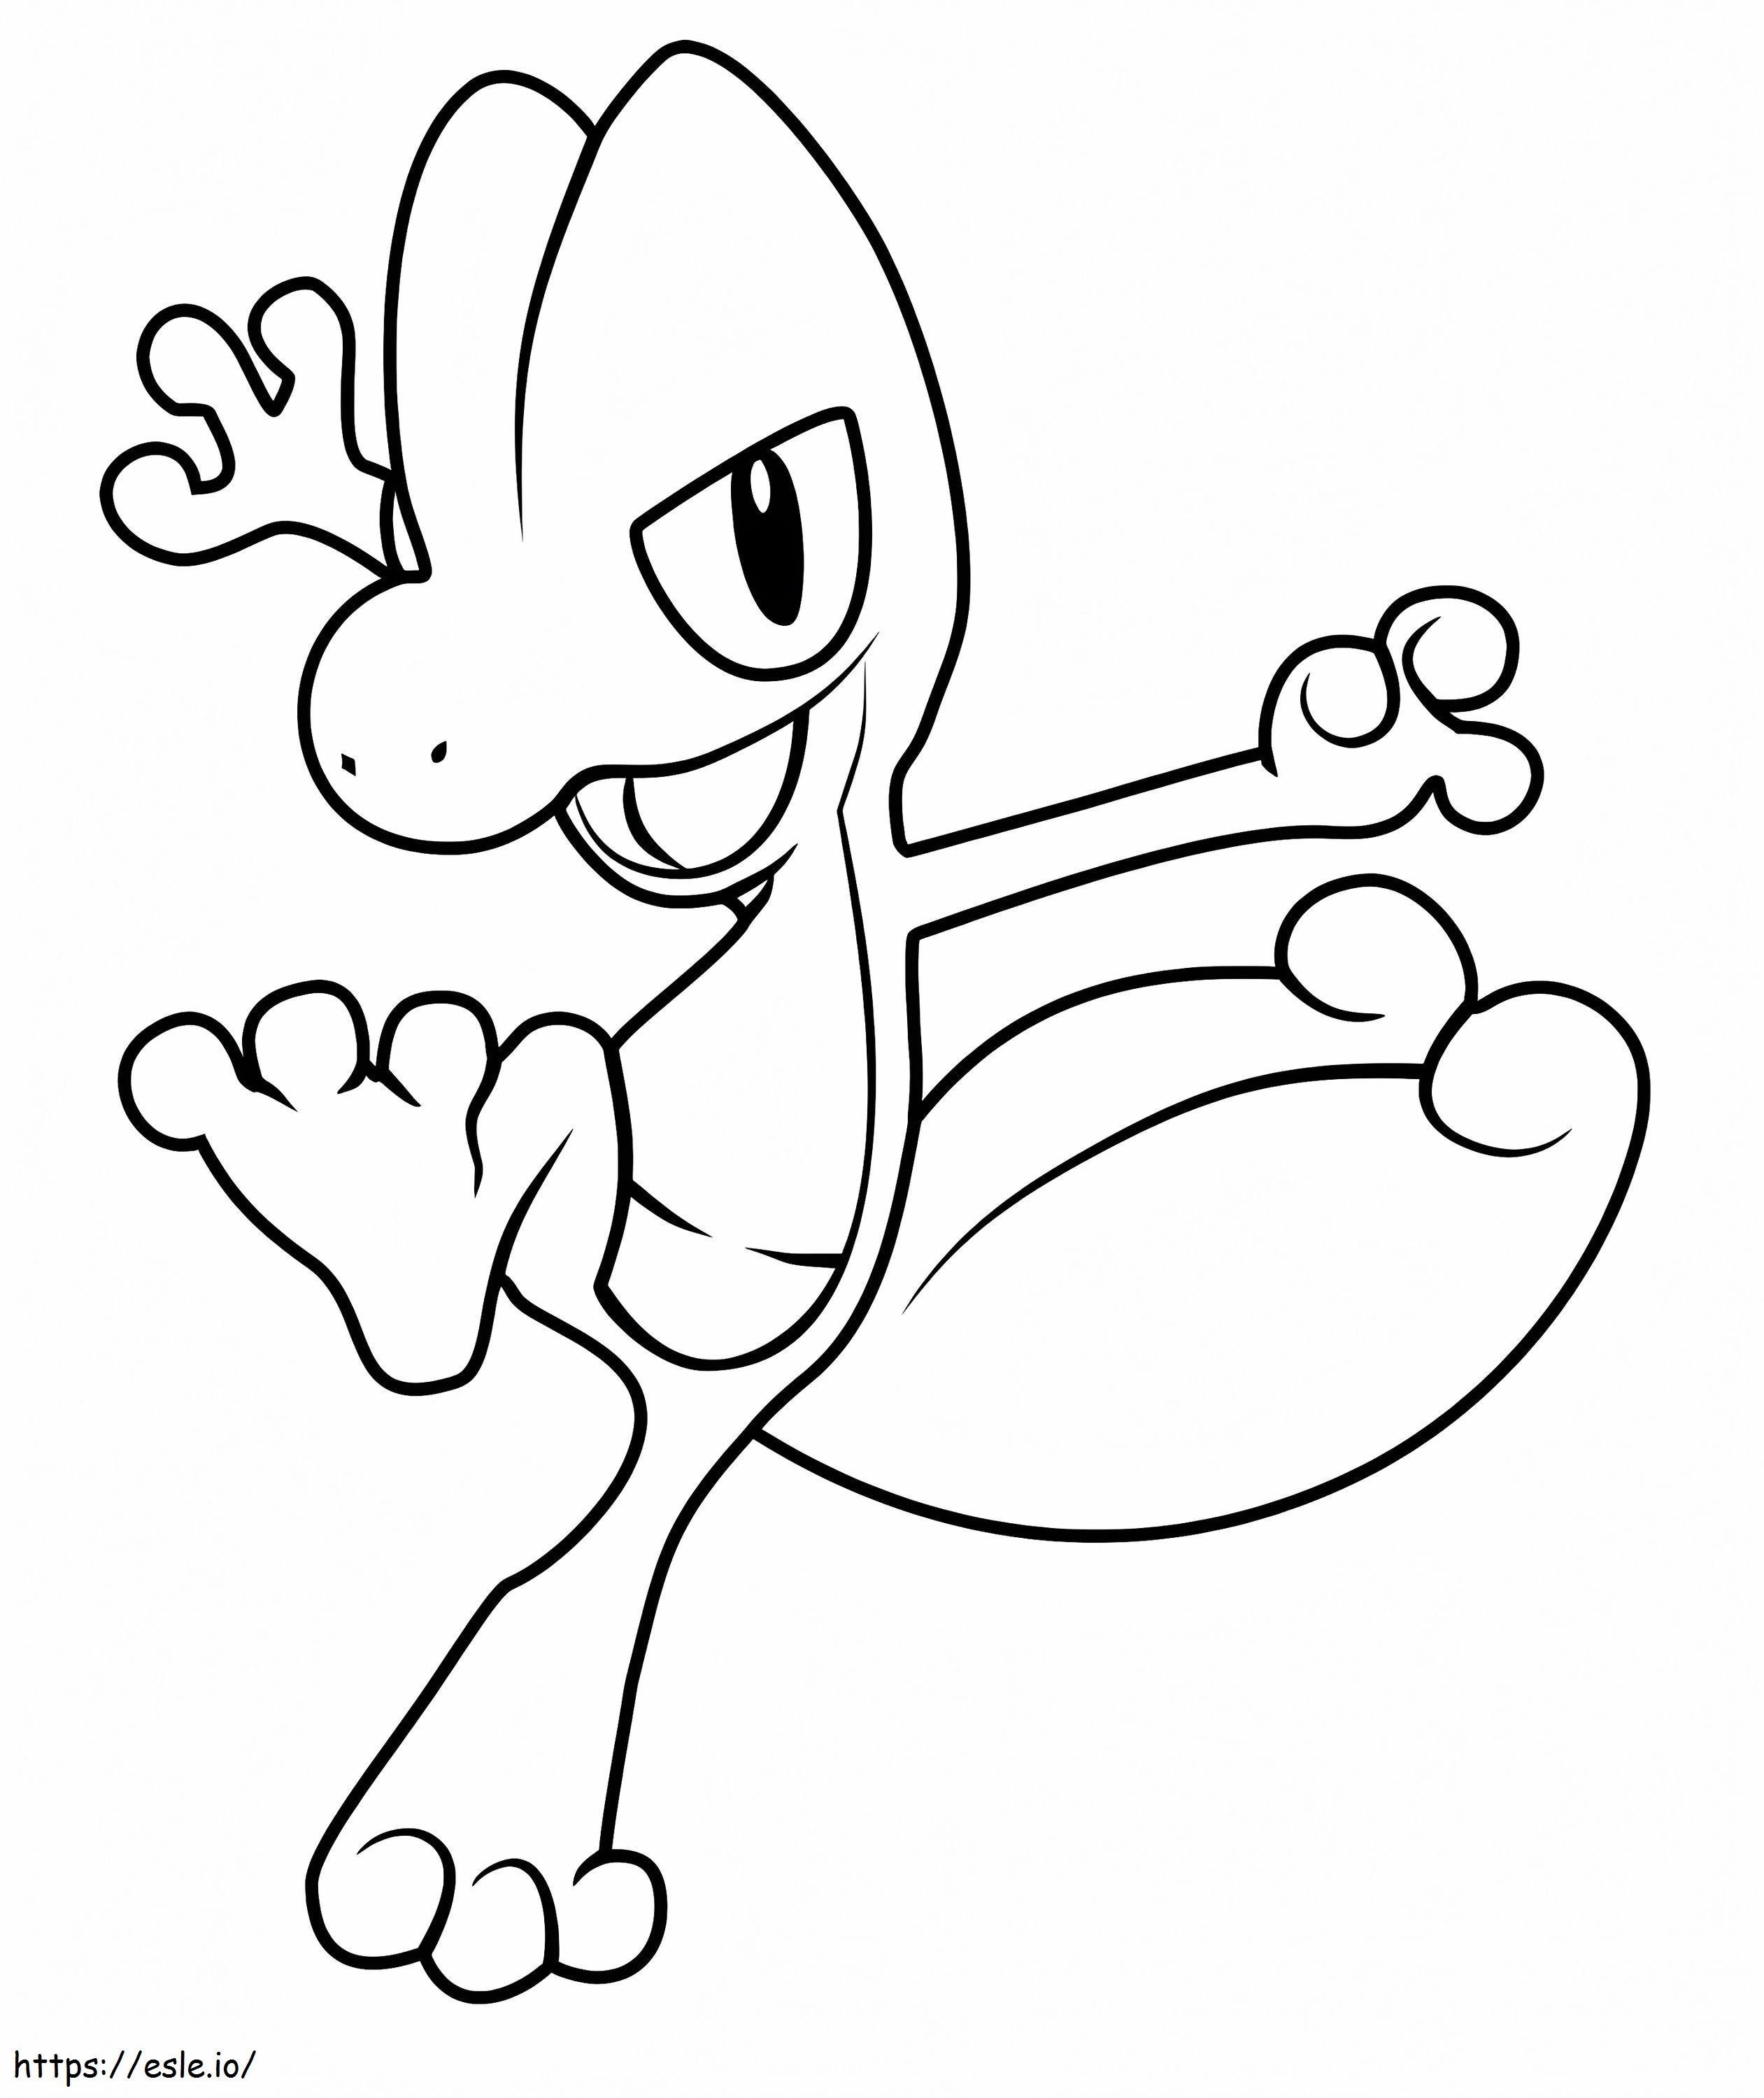 Treecko-Pokémon ausmalbilder